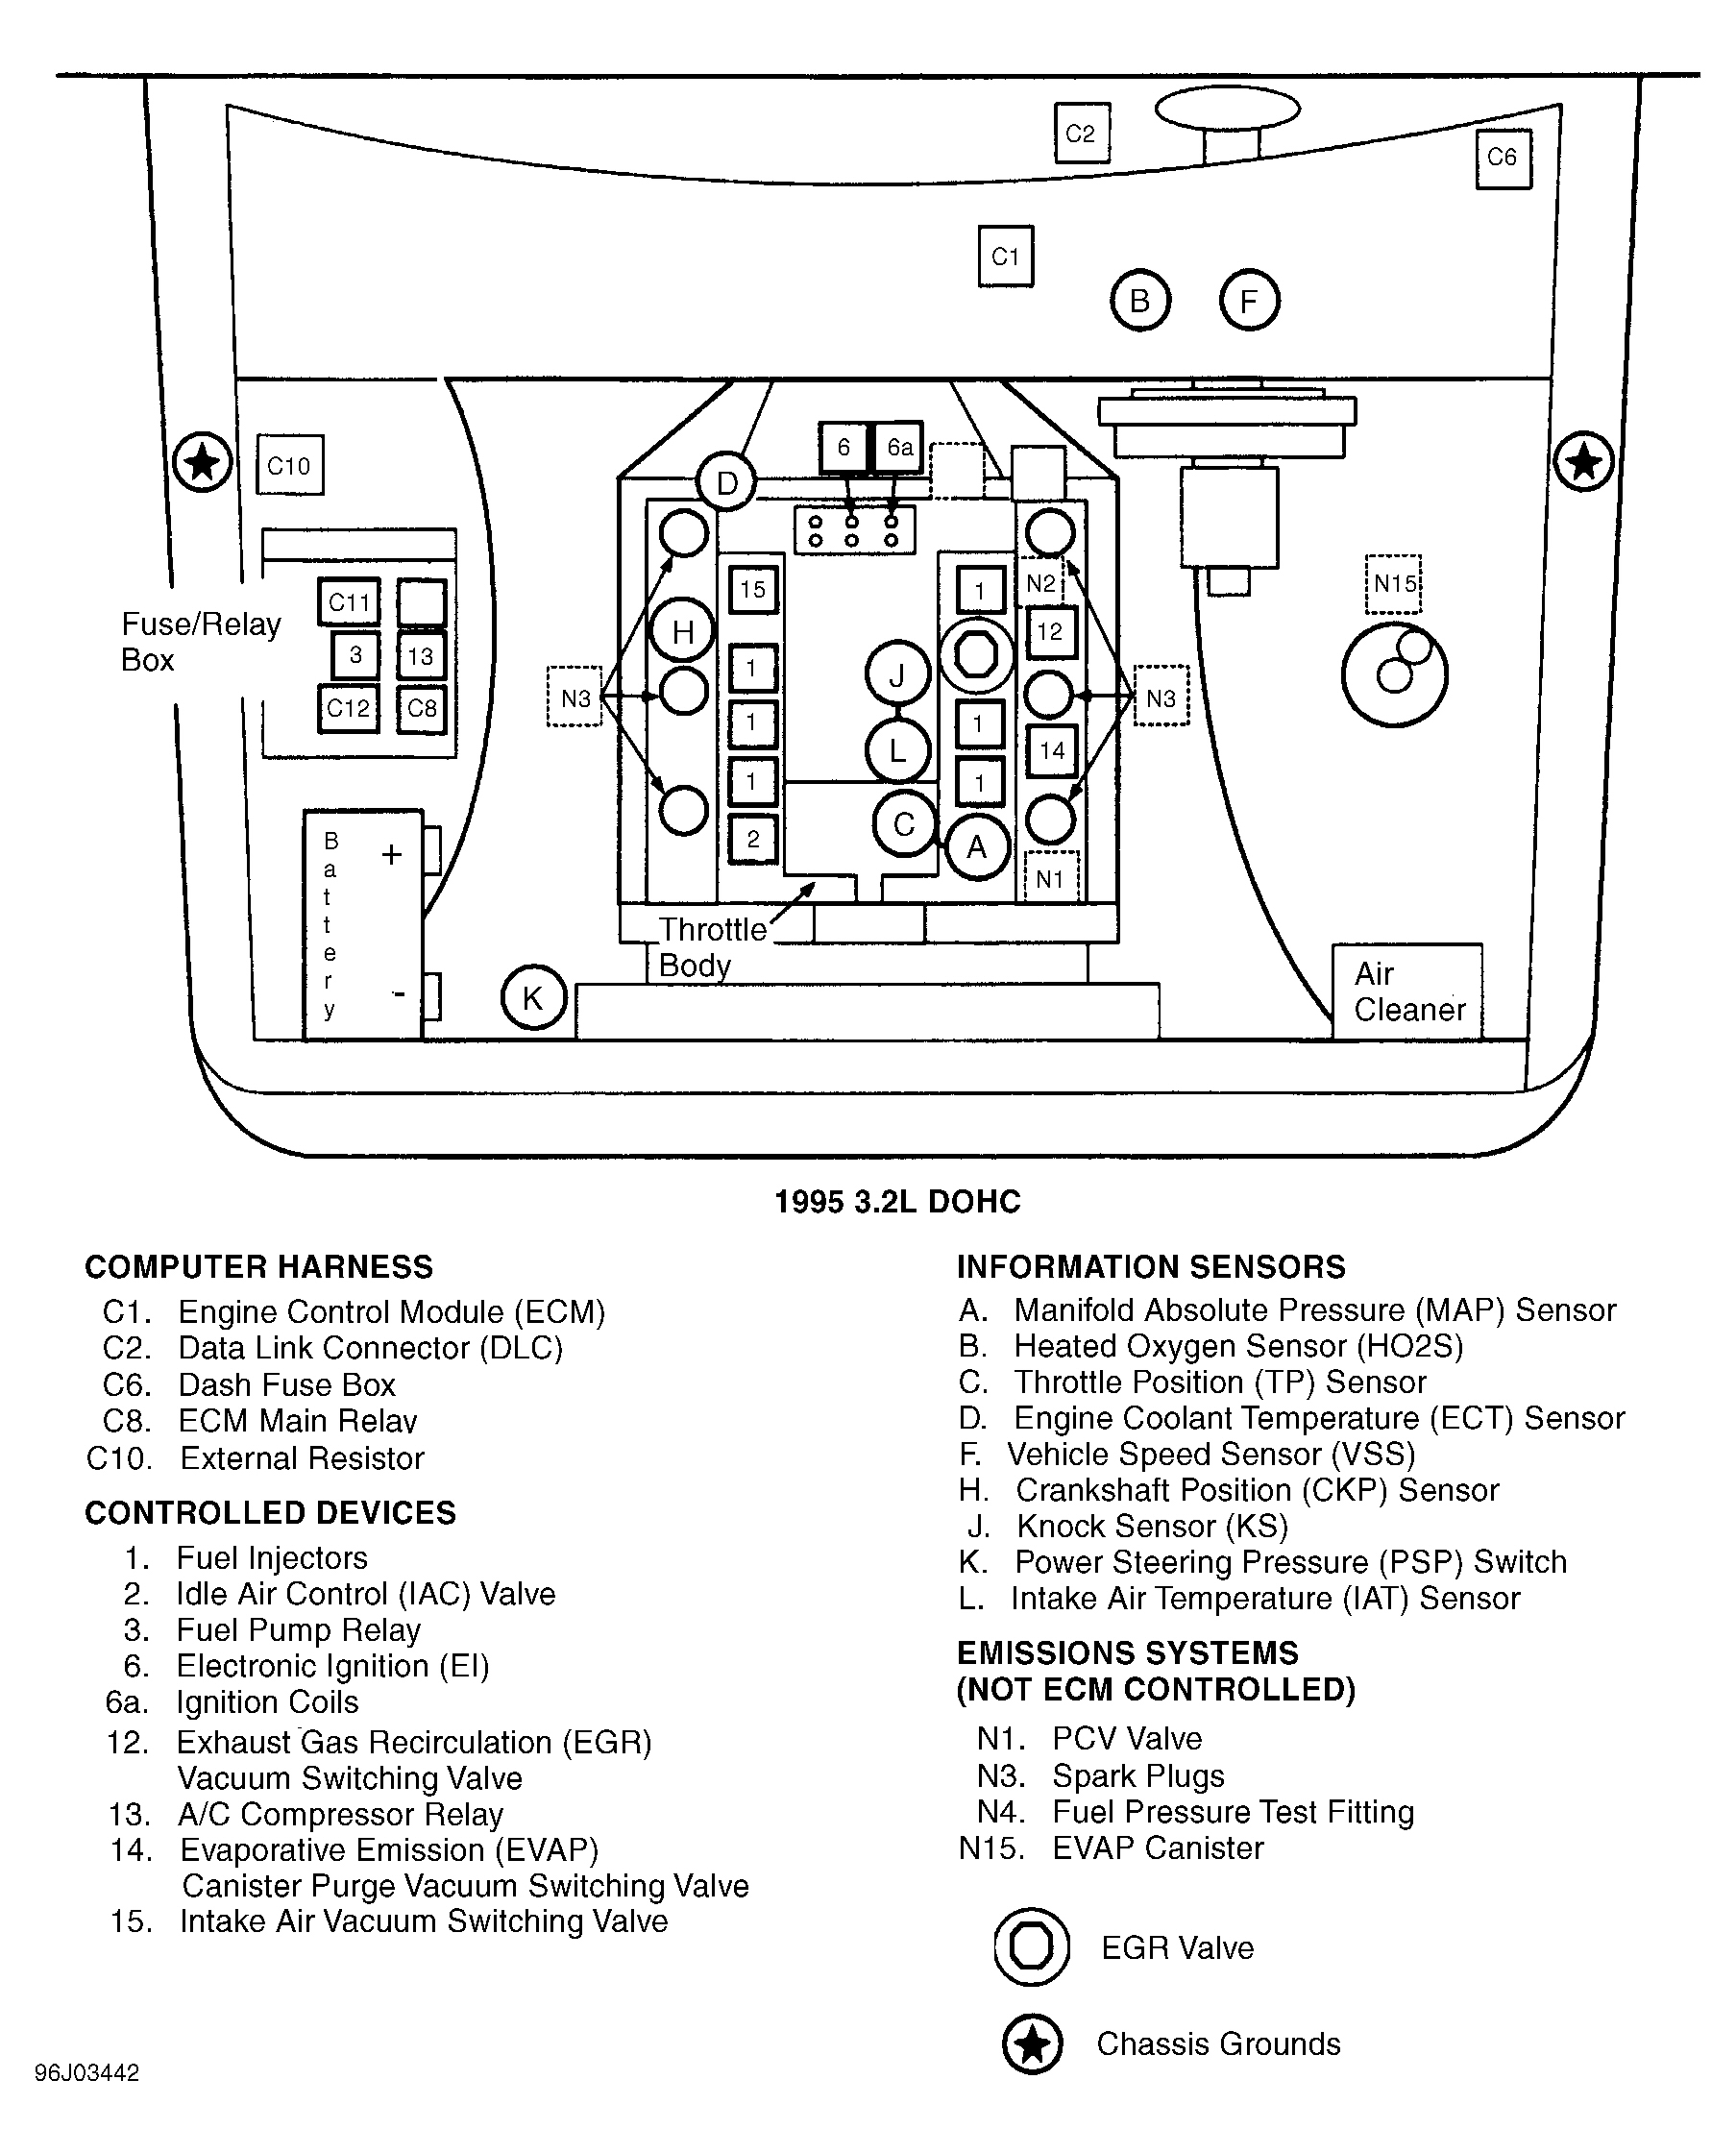 Isuzu Trooper SE 1996 - Component Locations -  Engine Compartment (1995 3.2L DOHC)